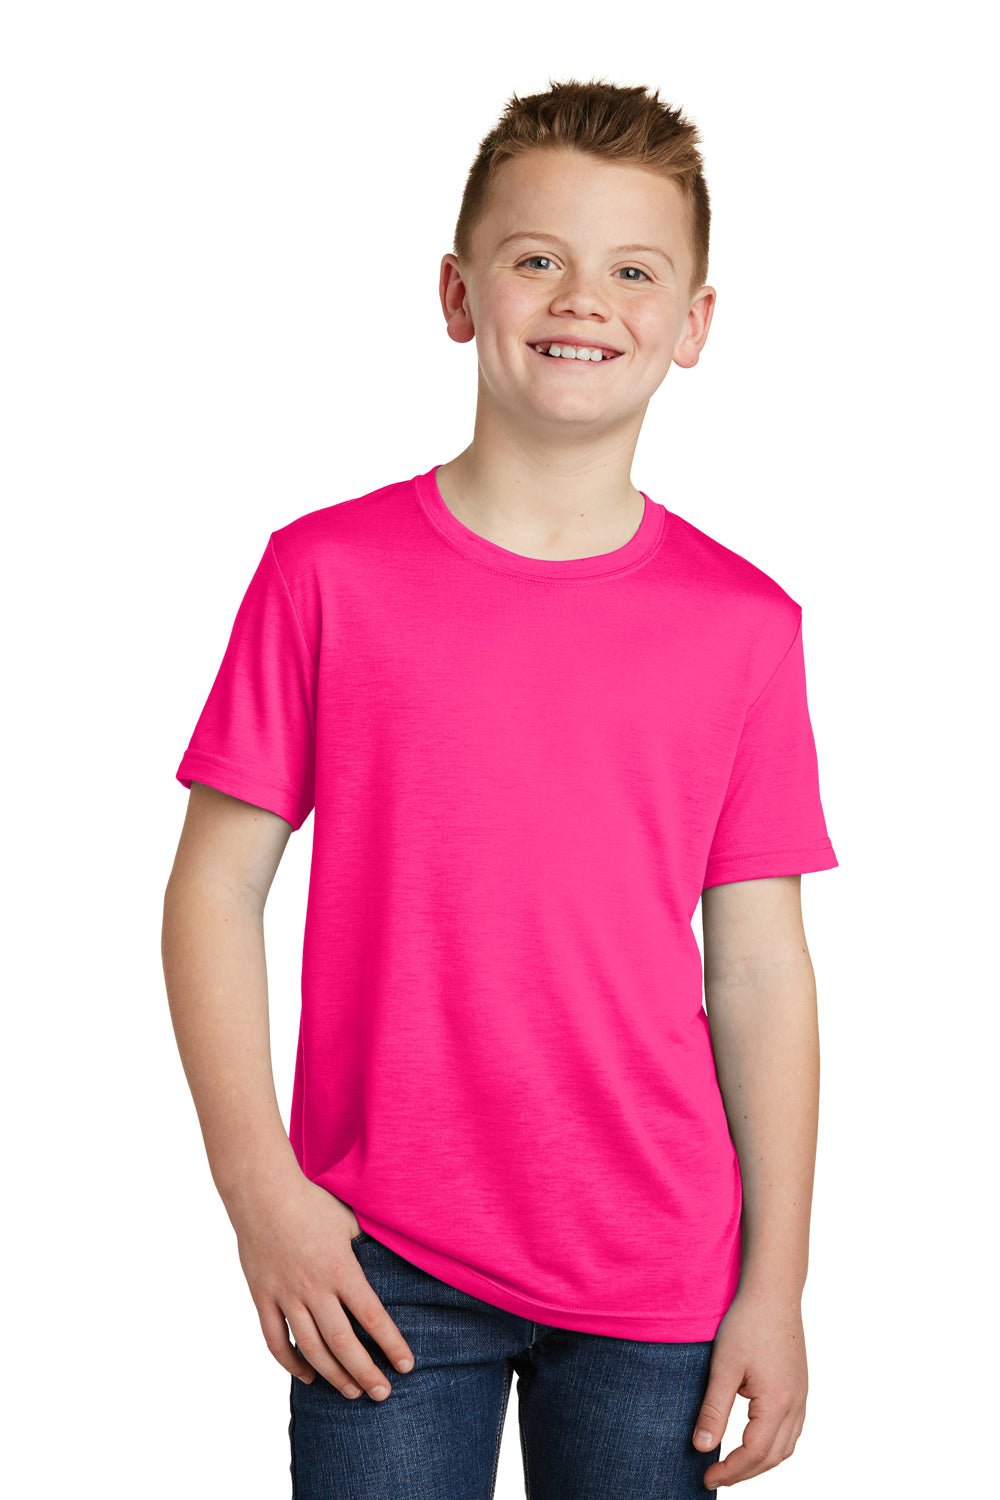 Sport-Tek YST450 Youth Competitor Moisture Wicking Short Sleeve Crewneck T-Shirt Neon Pink Front